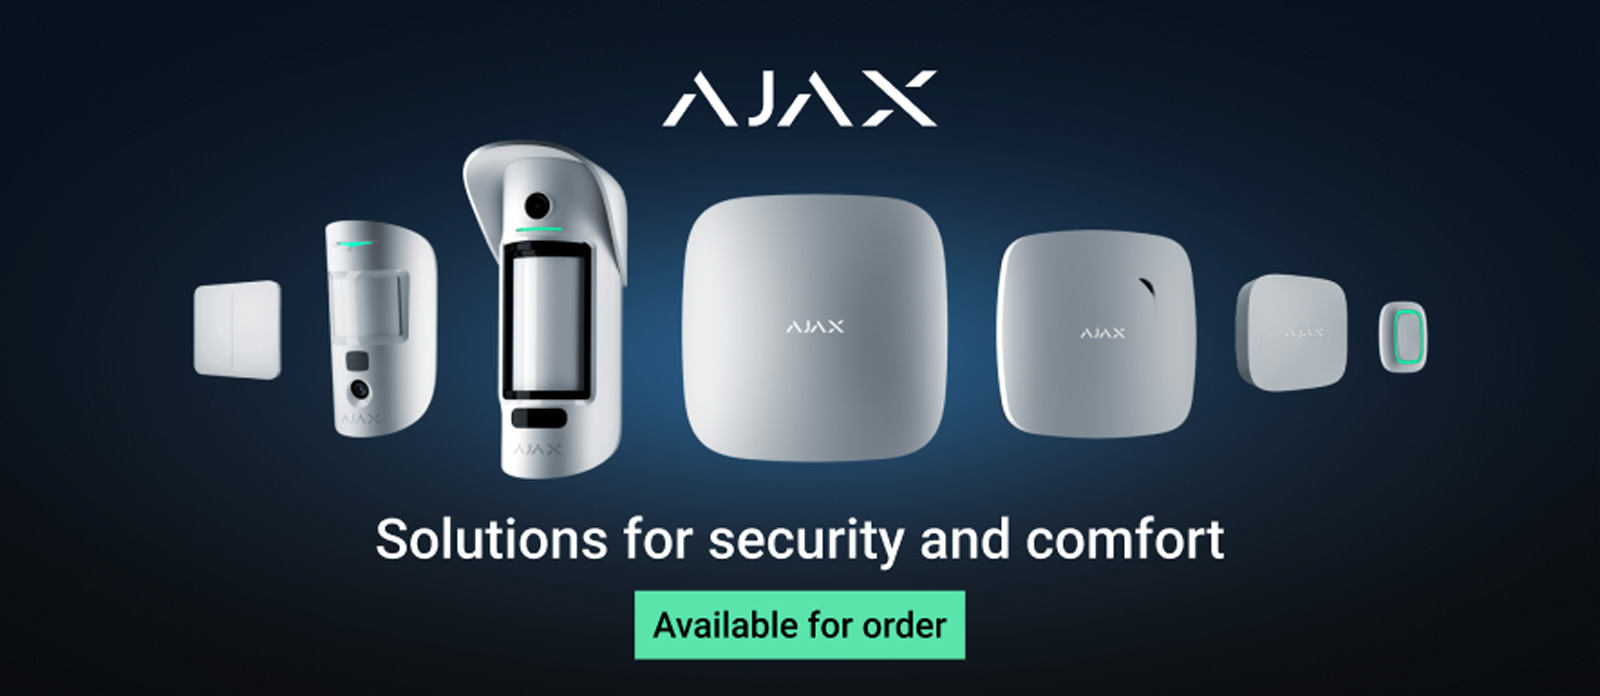 AJAX Web Banner